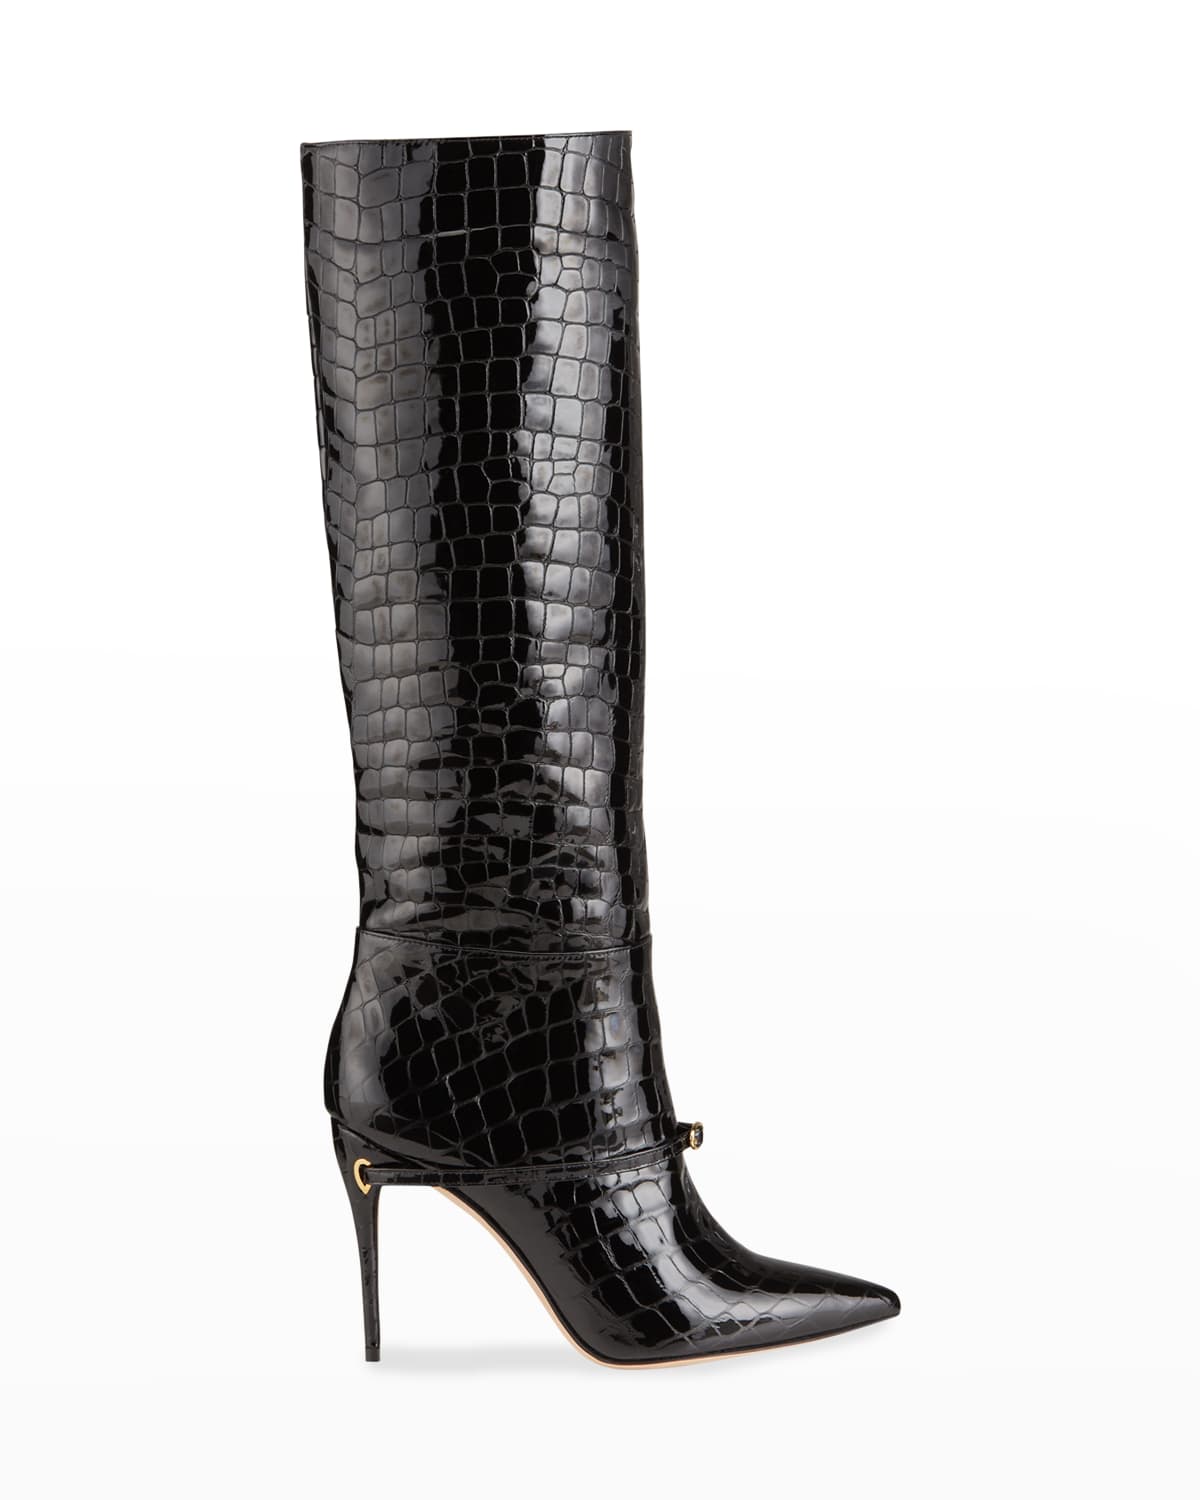 Cece Mock-Croc Patent Over-The-Knee Boots | Neiman Marcus